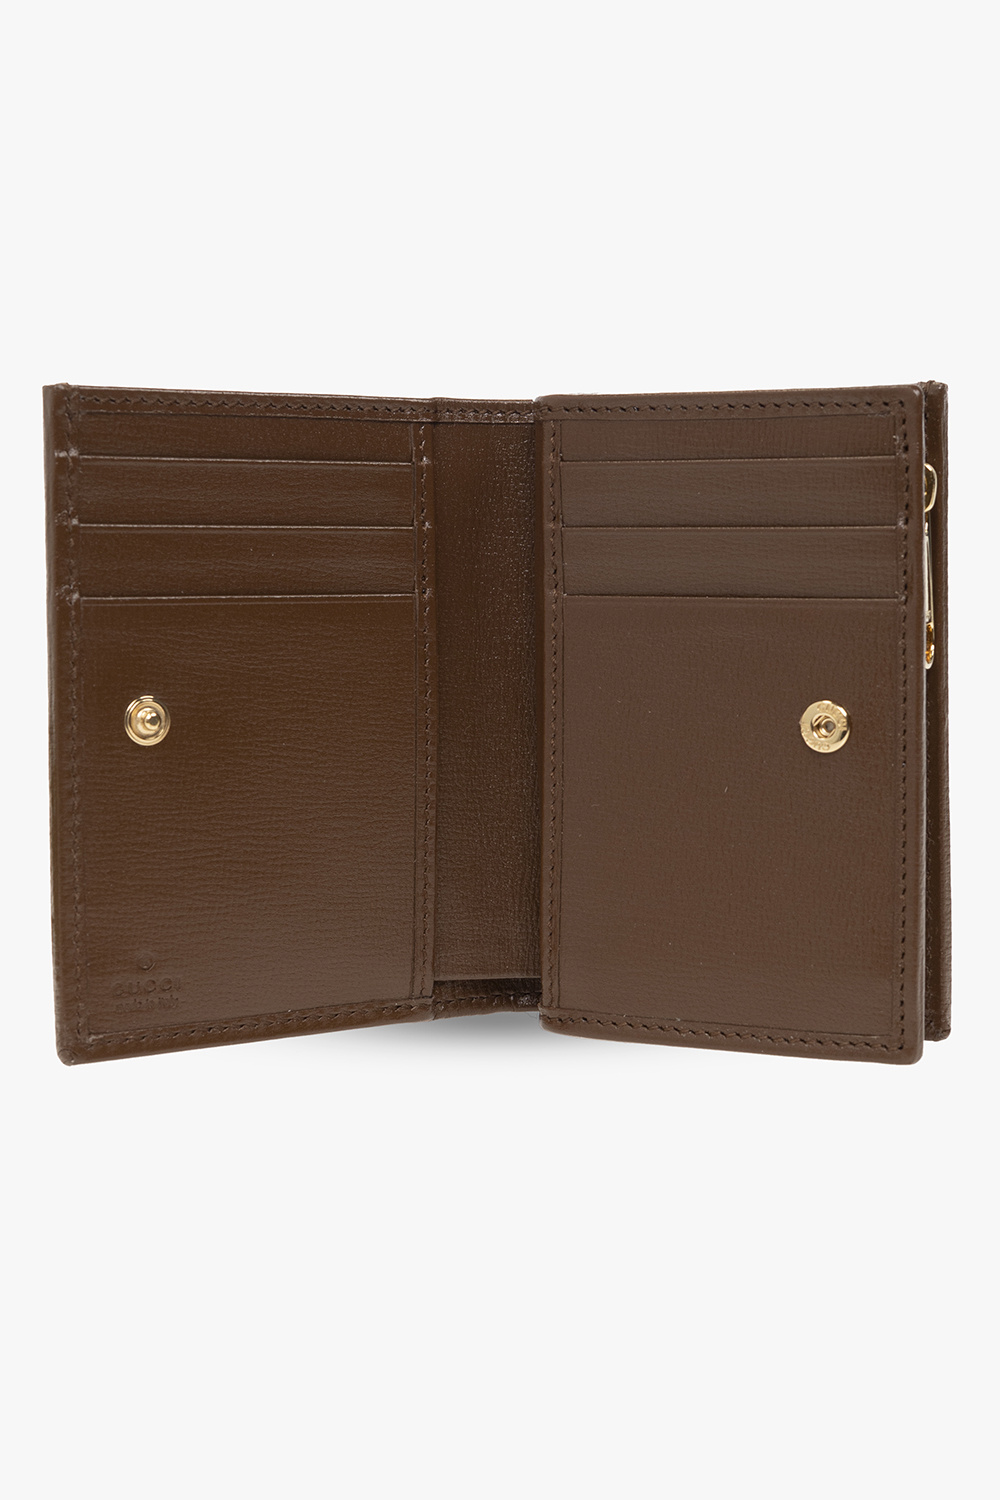 gucci trousers ‘Horsebit 1955’ wallet